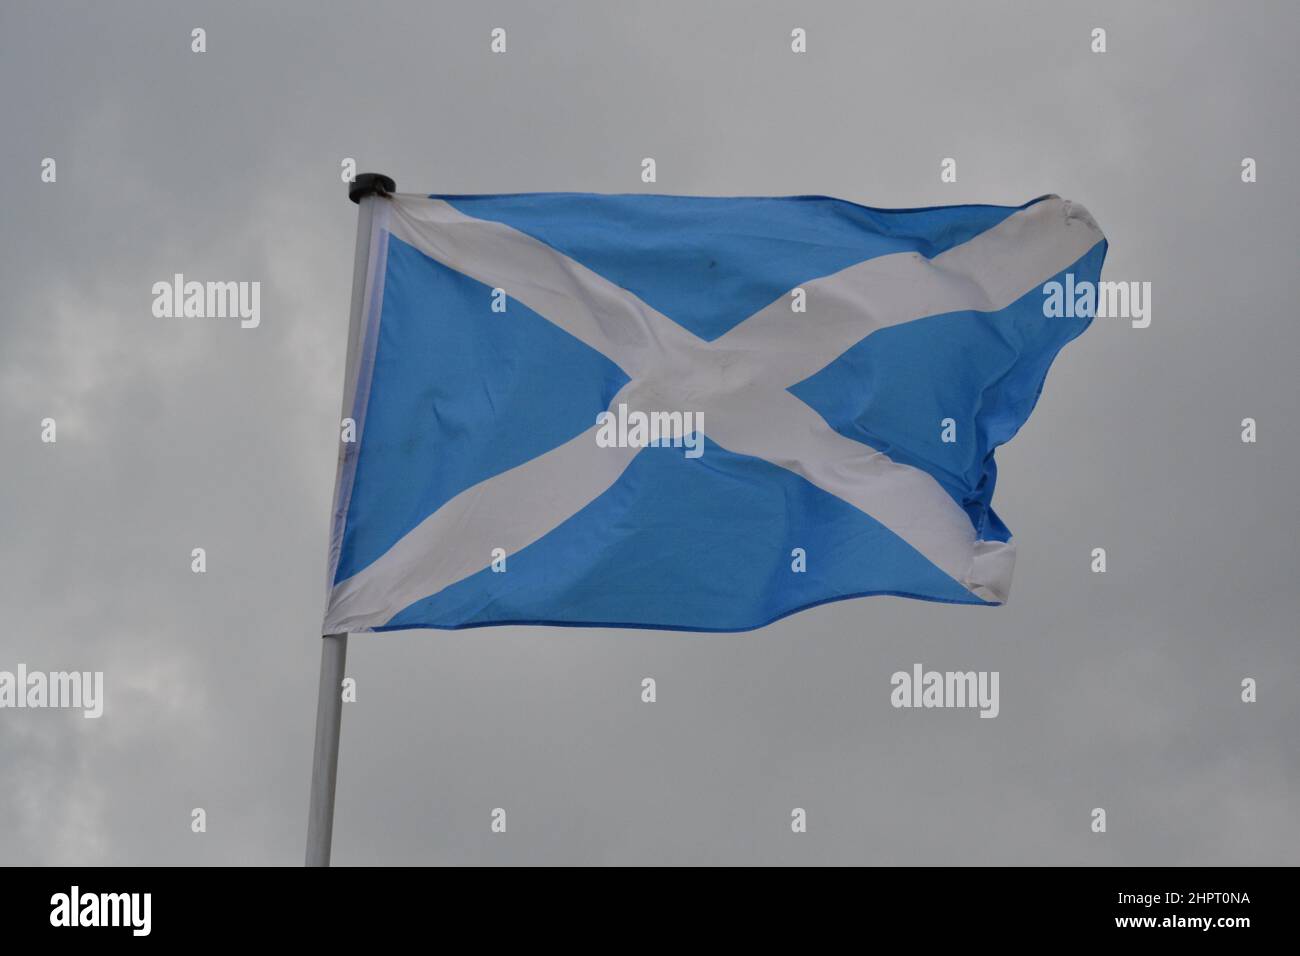 Bandiera blu croce bianca immagini e fotografie stock ad alta risoluzione -  Alamy